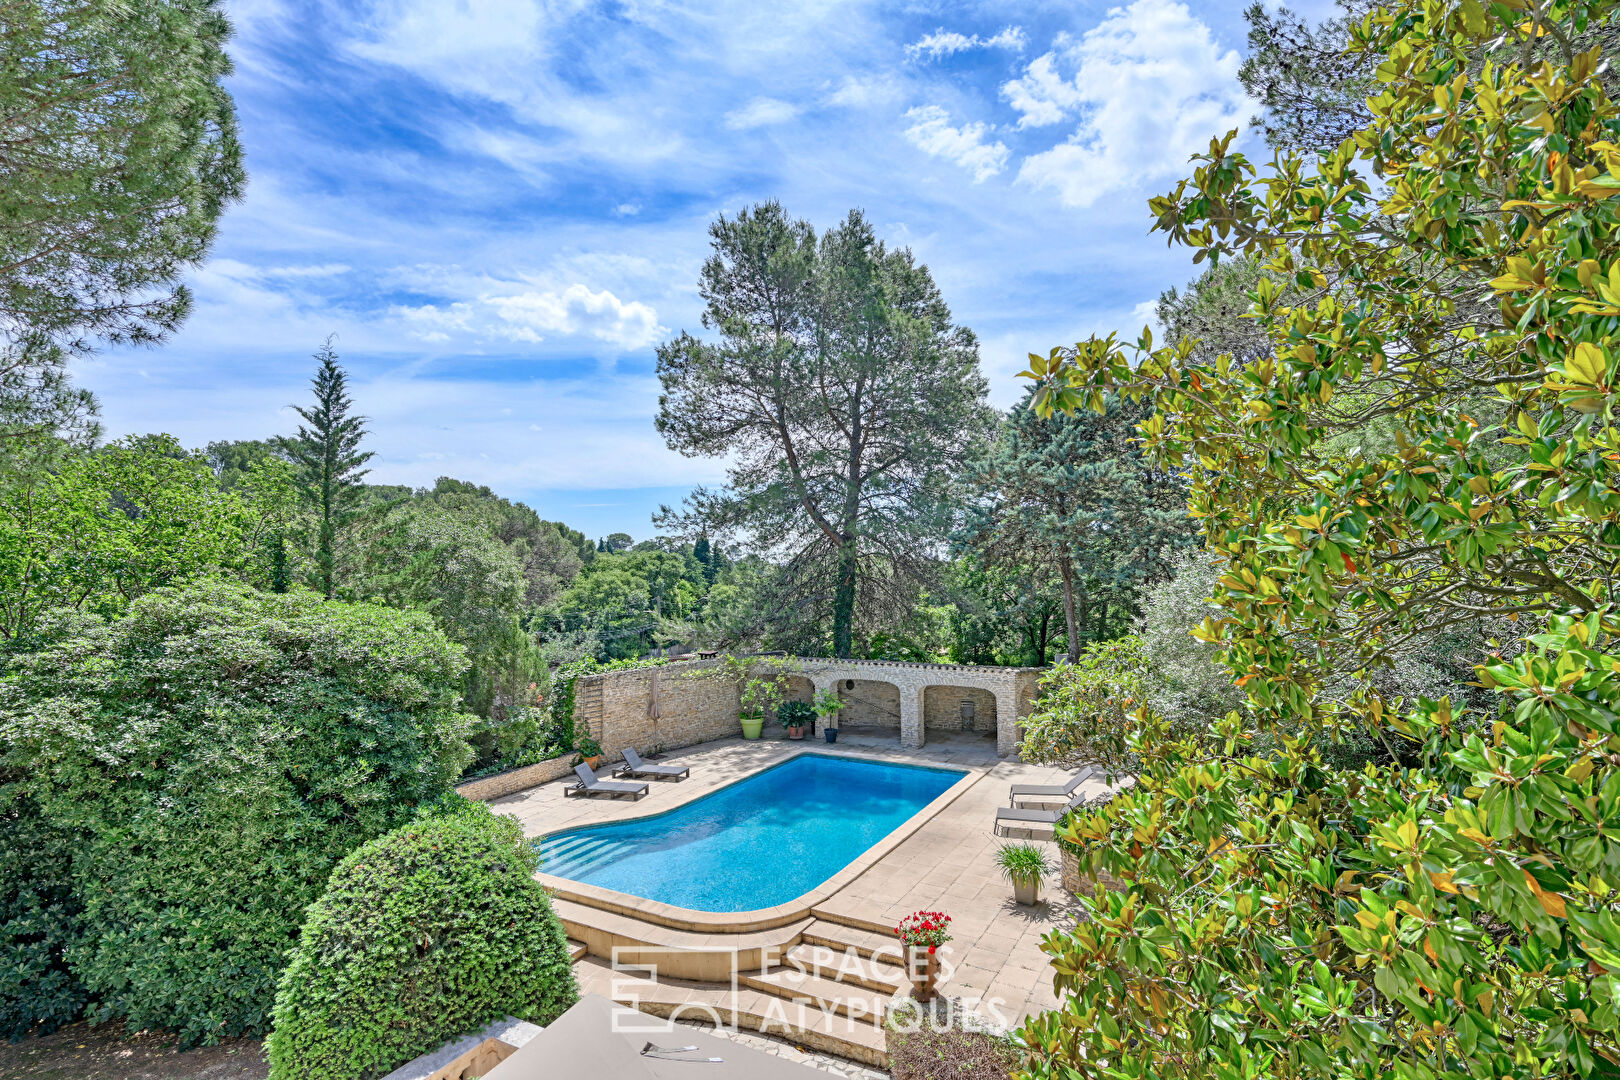 Prestigious villa with its green garden and swimming pool